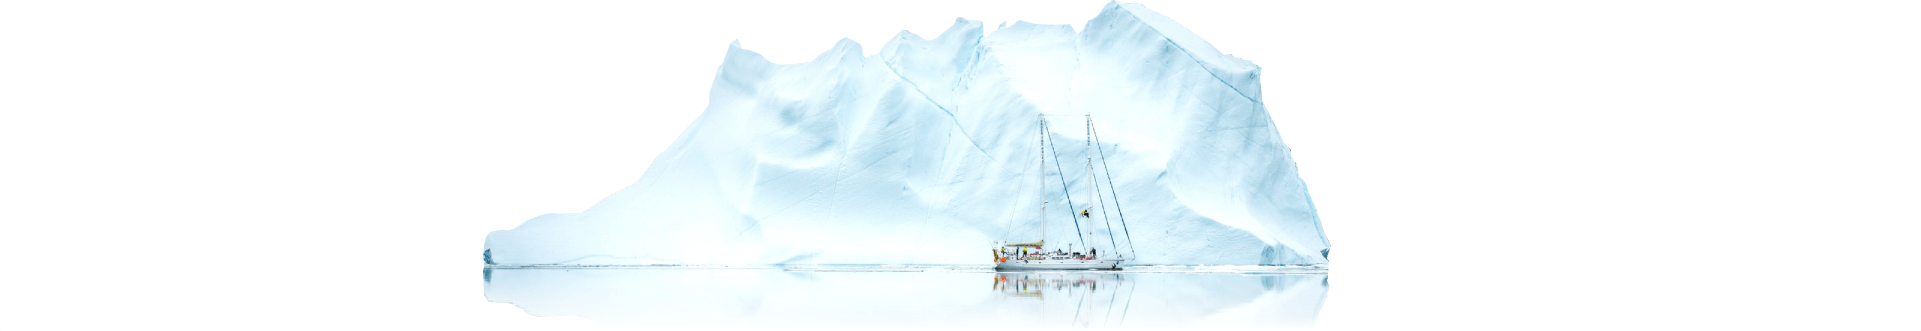 École de Plongée Iceberg